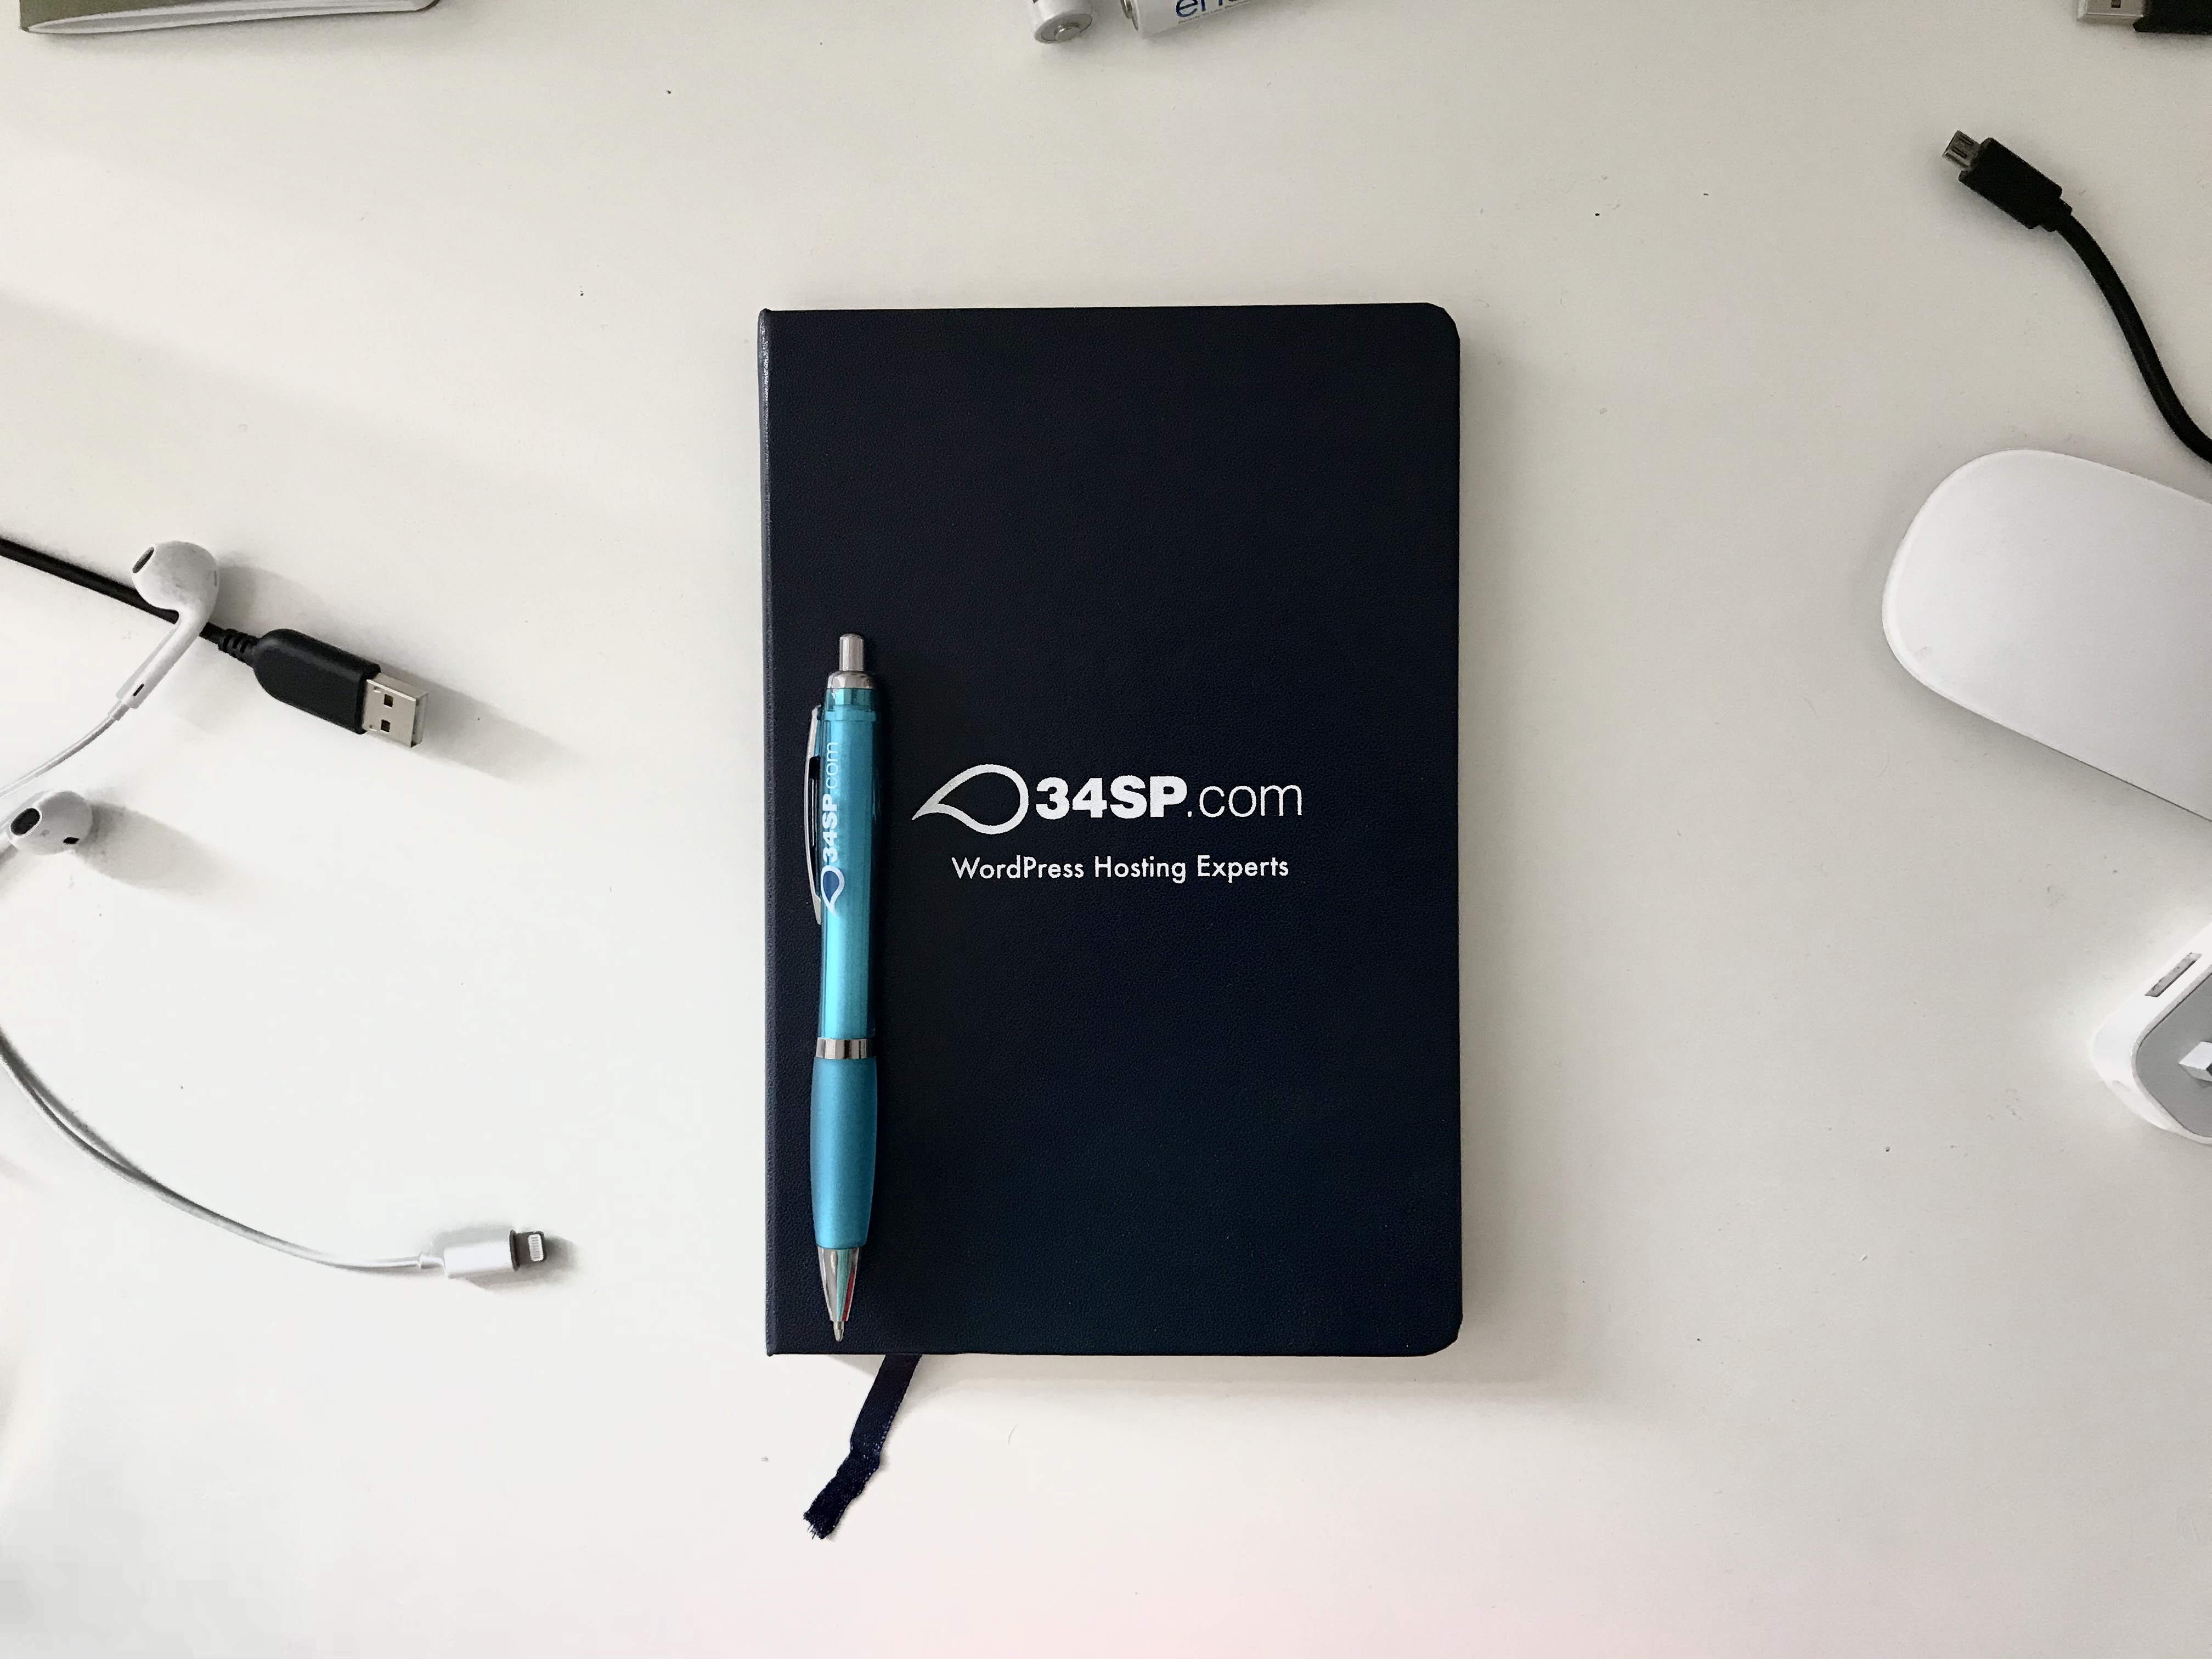 34SP.com notebook and pen